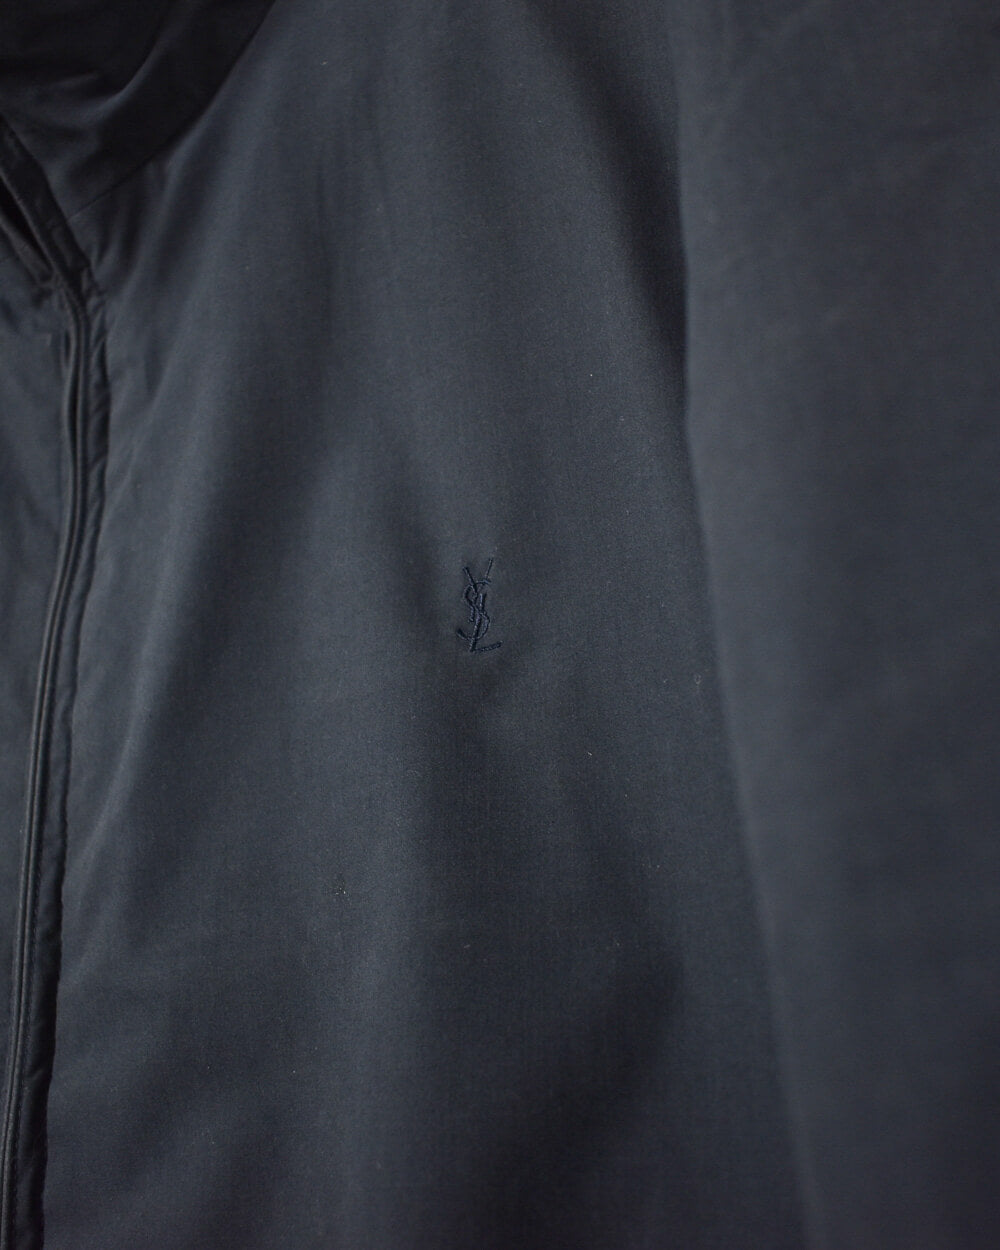 Grey Yves Saint Laurent Velour Lined Windbreaker Jacket - X-Large